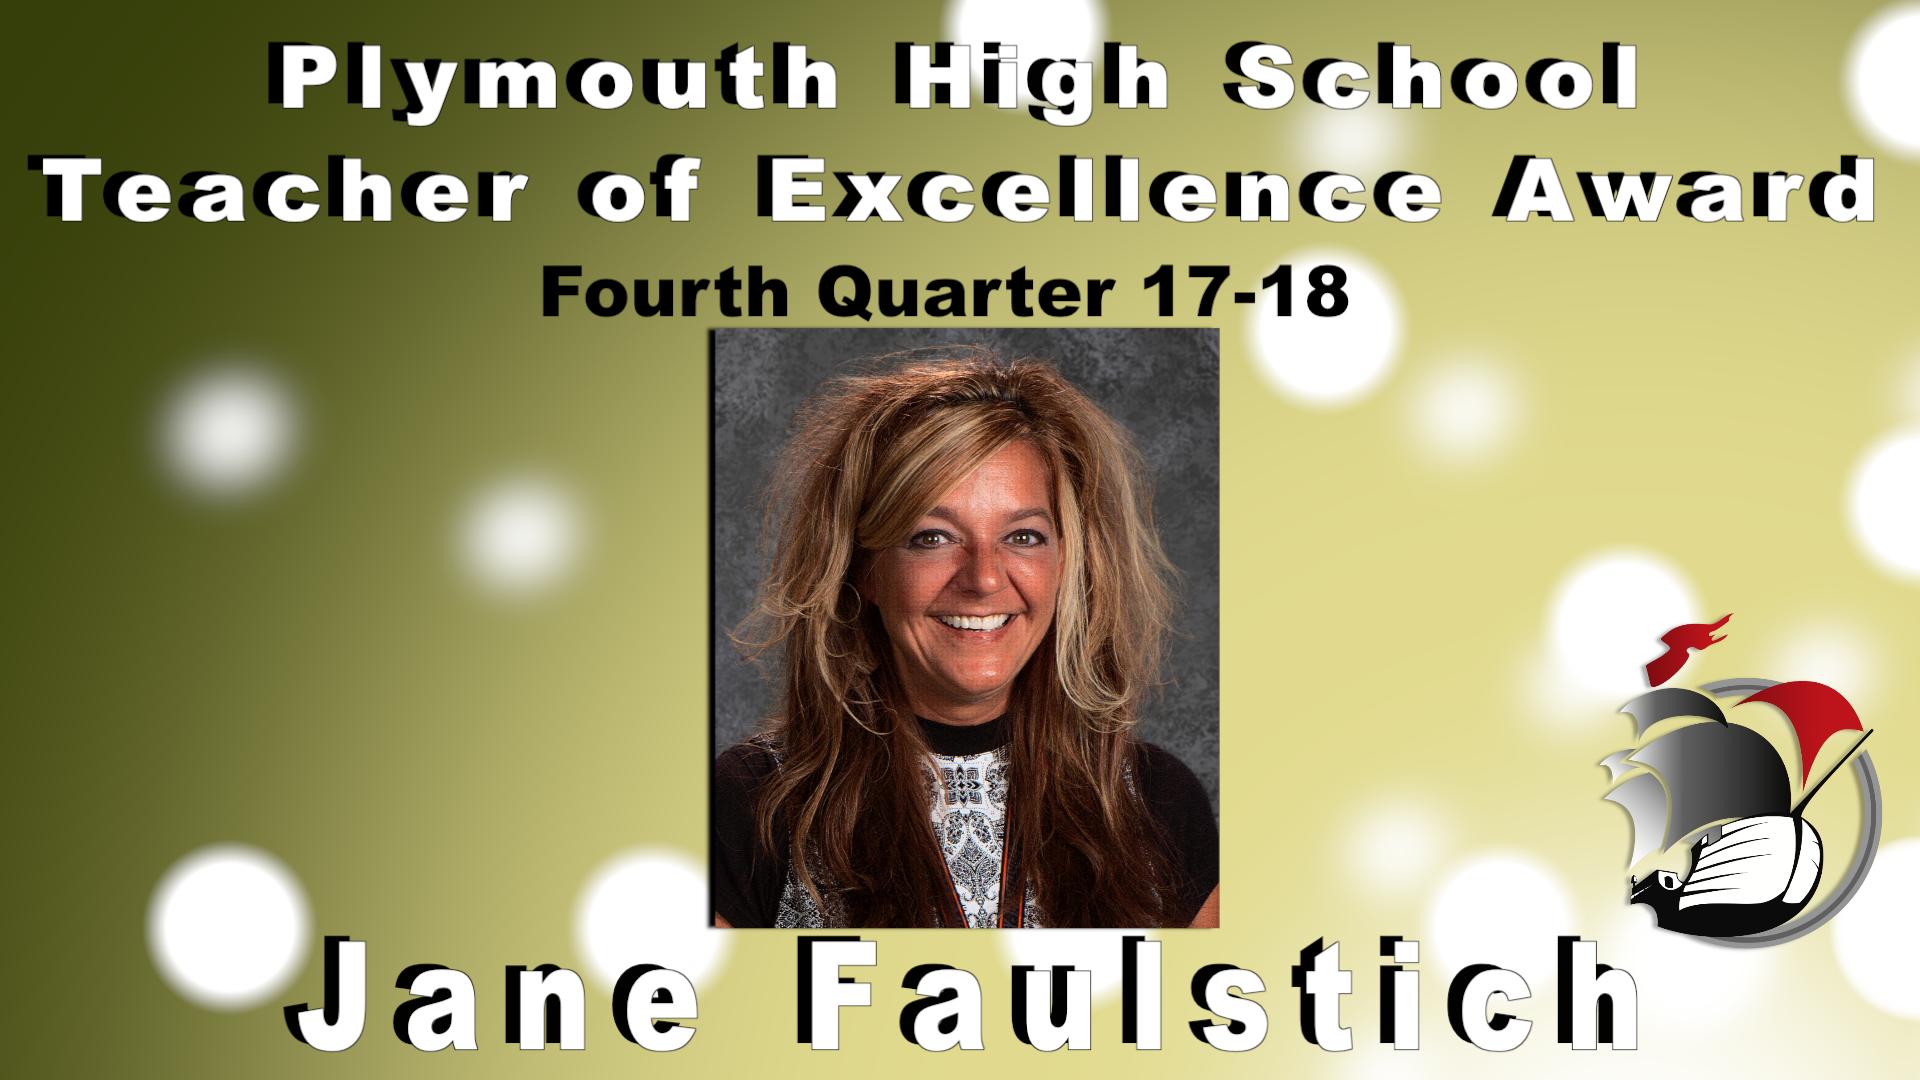 Plymouth High School Teacher of Excellence Award Fourth Quarter 17-18 Jane Faulstich